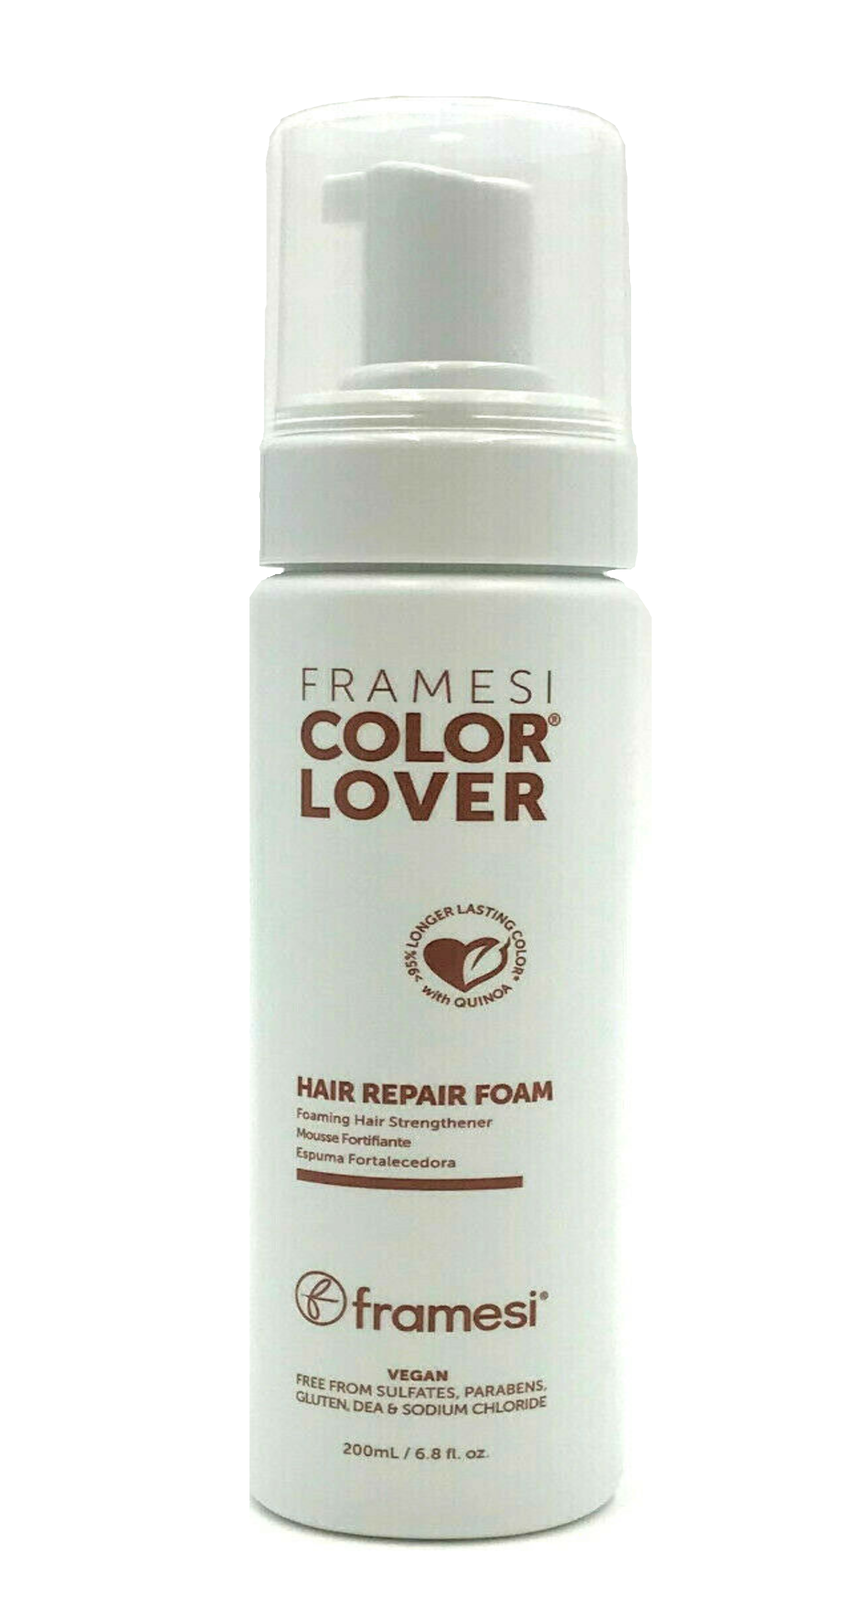 Framesi Color Lover Hair Repair Foam, 6.8 ounces - $31.78